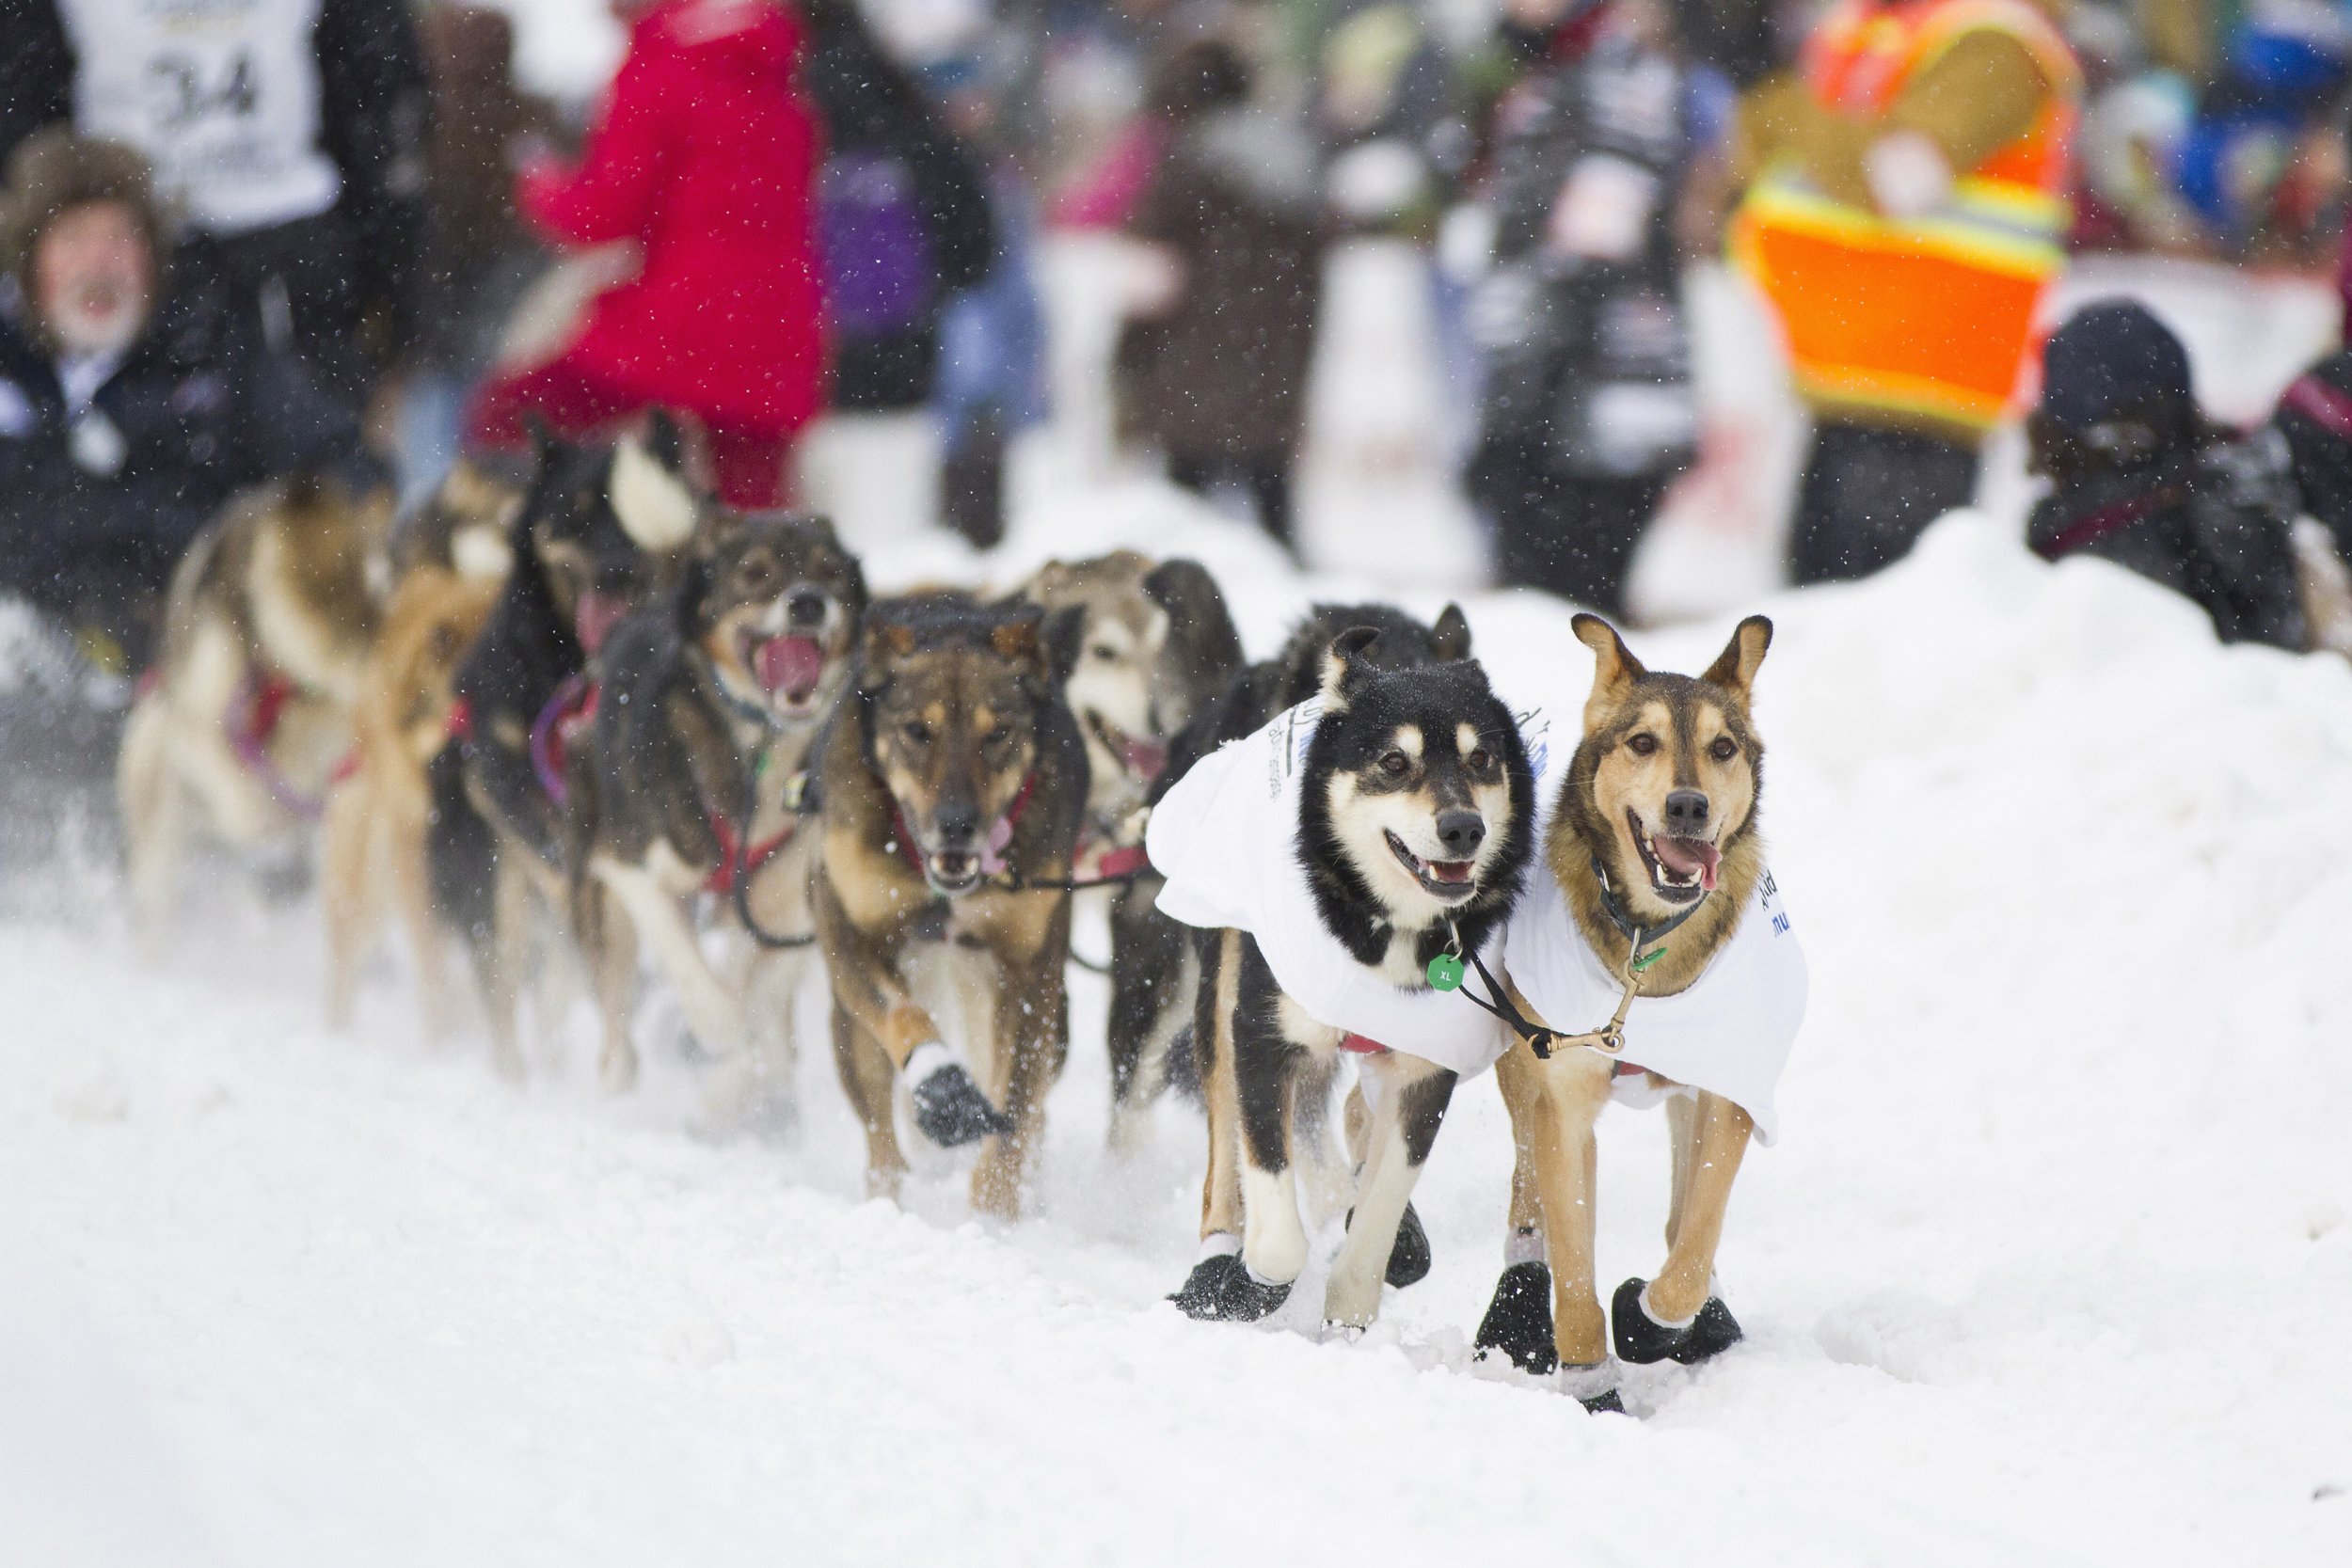 Dallas Seaveys sled dogs, last years winners